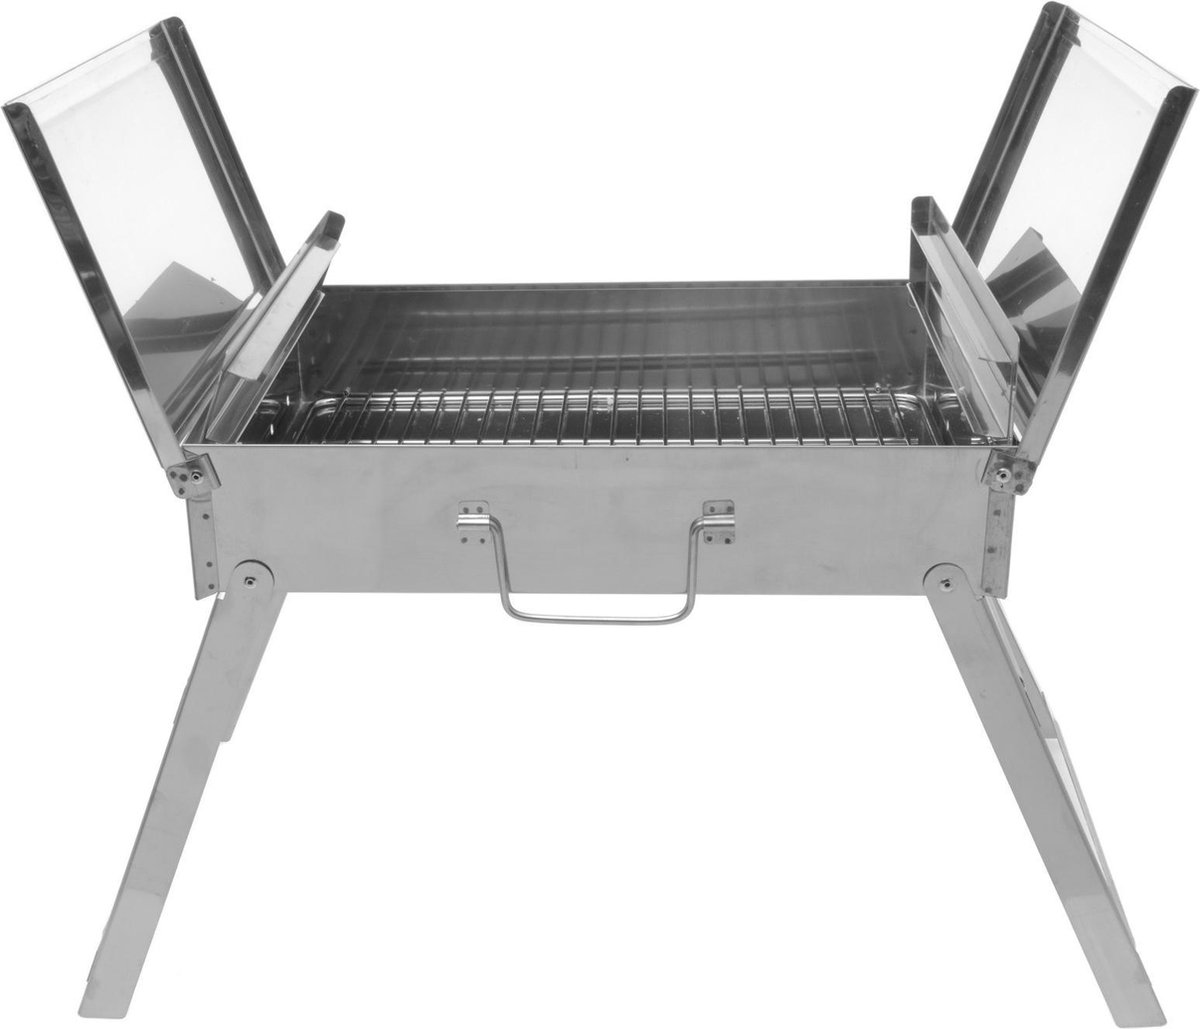 Mustang Trekking grill S - Uitklapbare barbecue - Opvouwbare houtskool barbecue